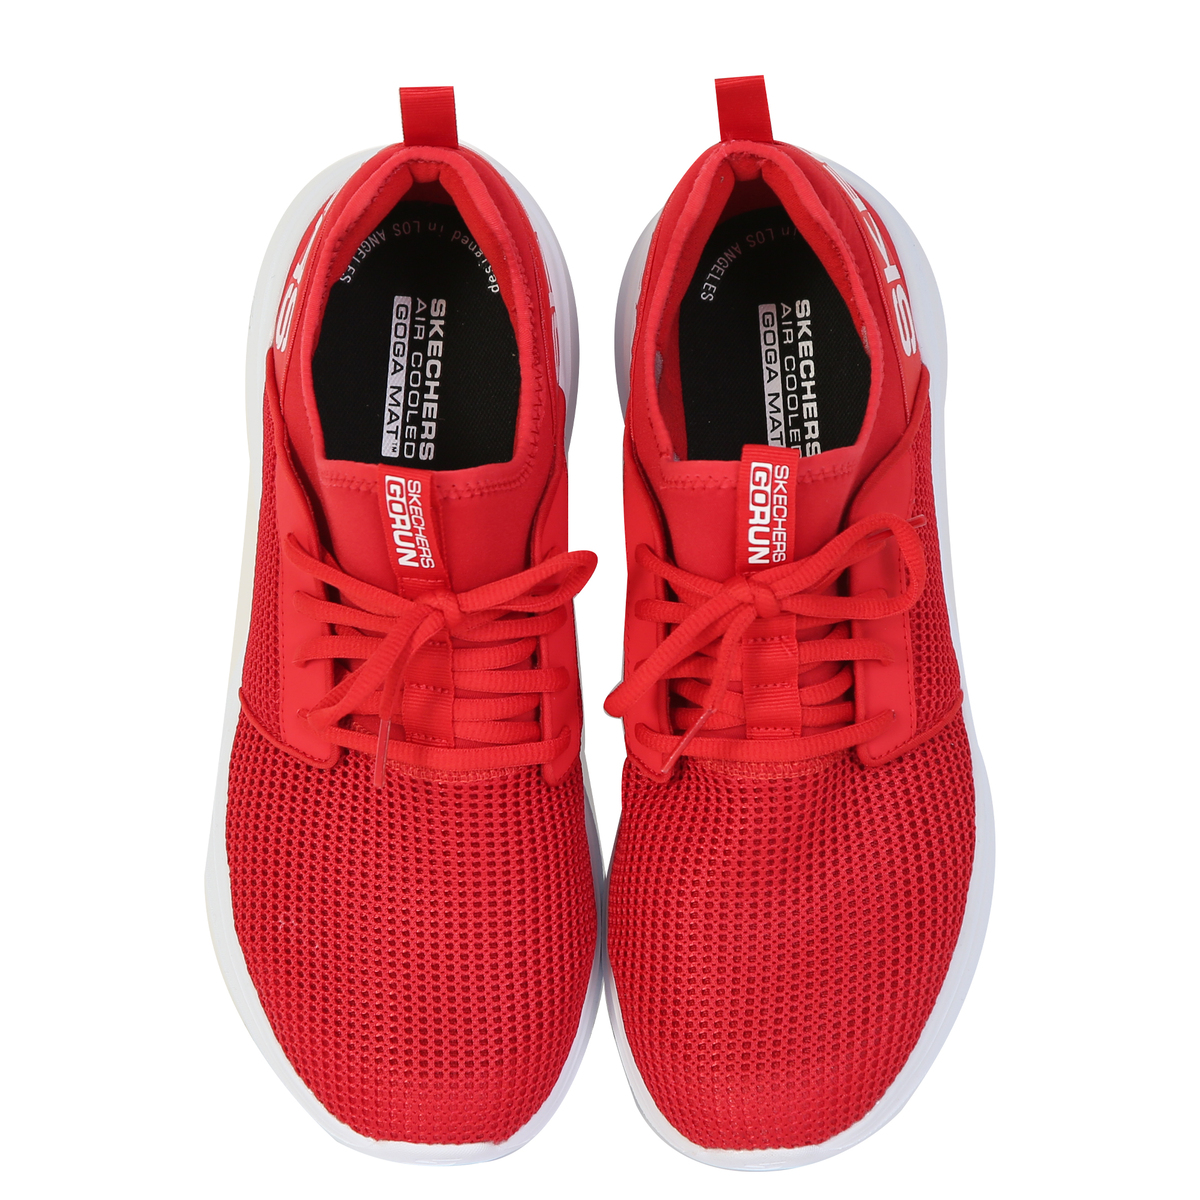 Skechers Men's Sport Shoes 55103 Red, 41